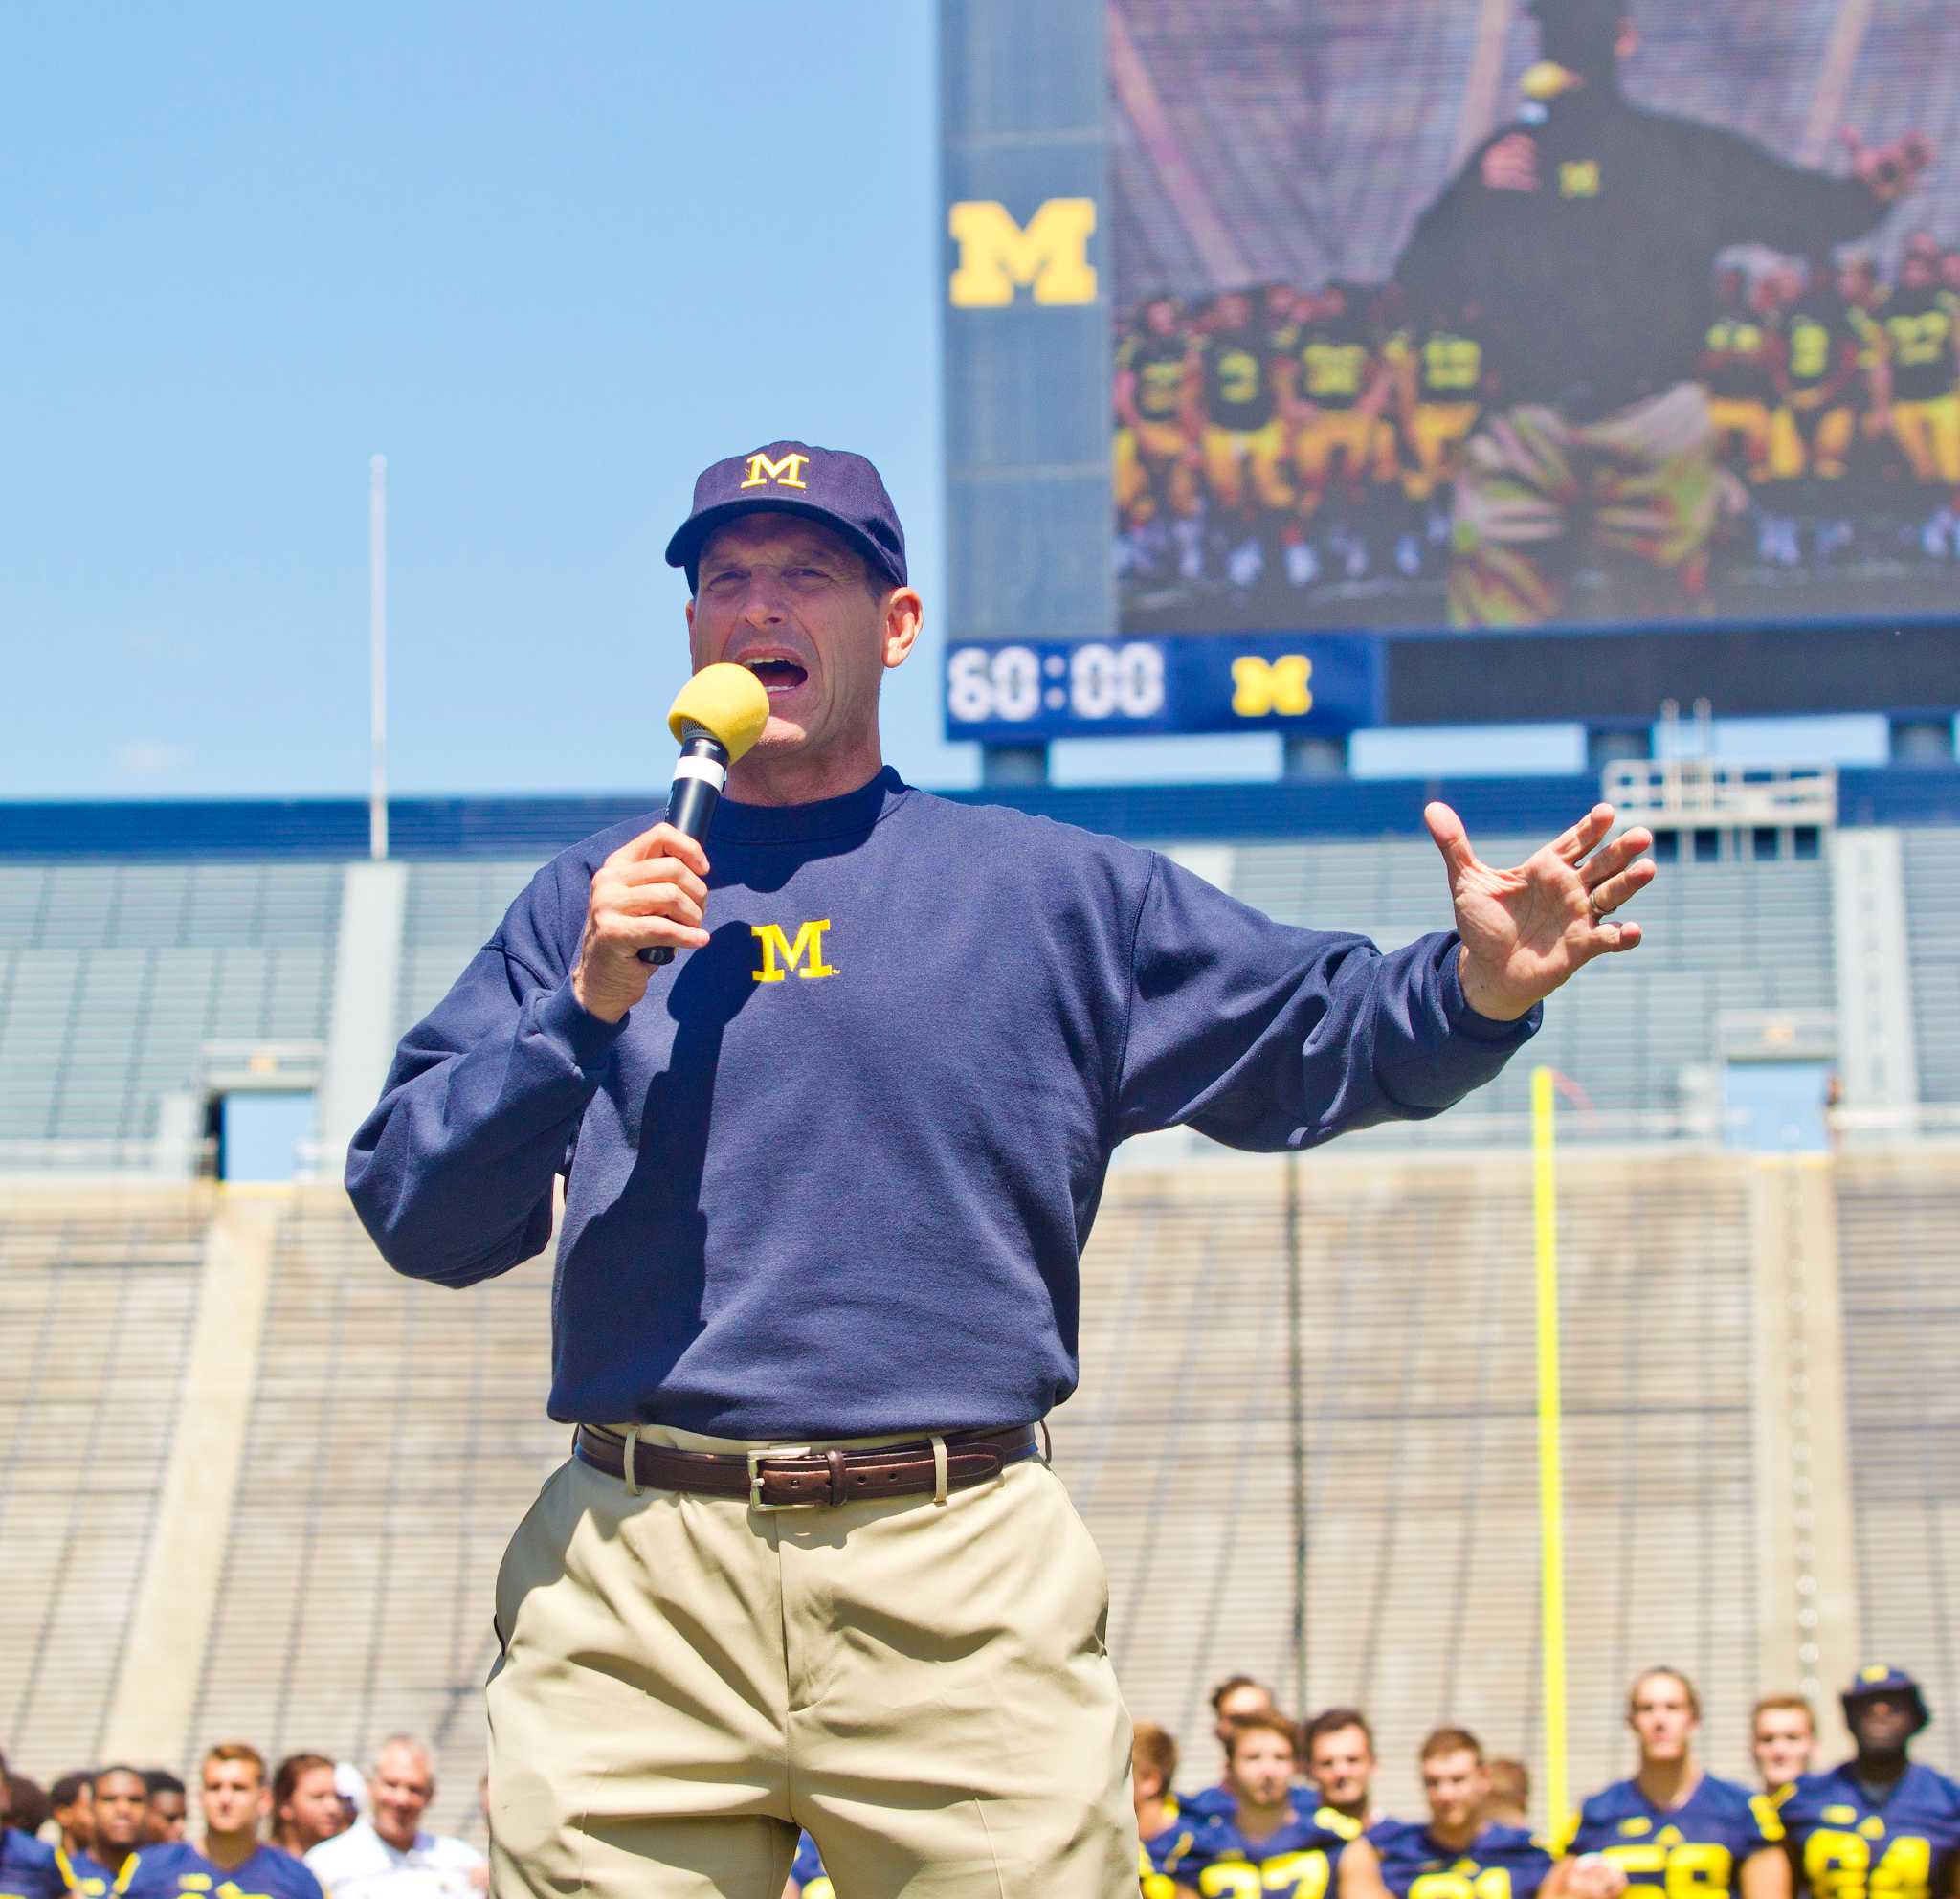 Jim Harbaugh To Michigan: Why Won't He Return to His Alma Mater